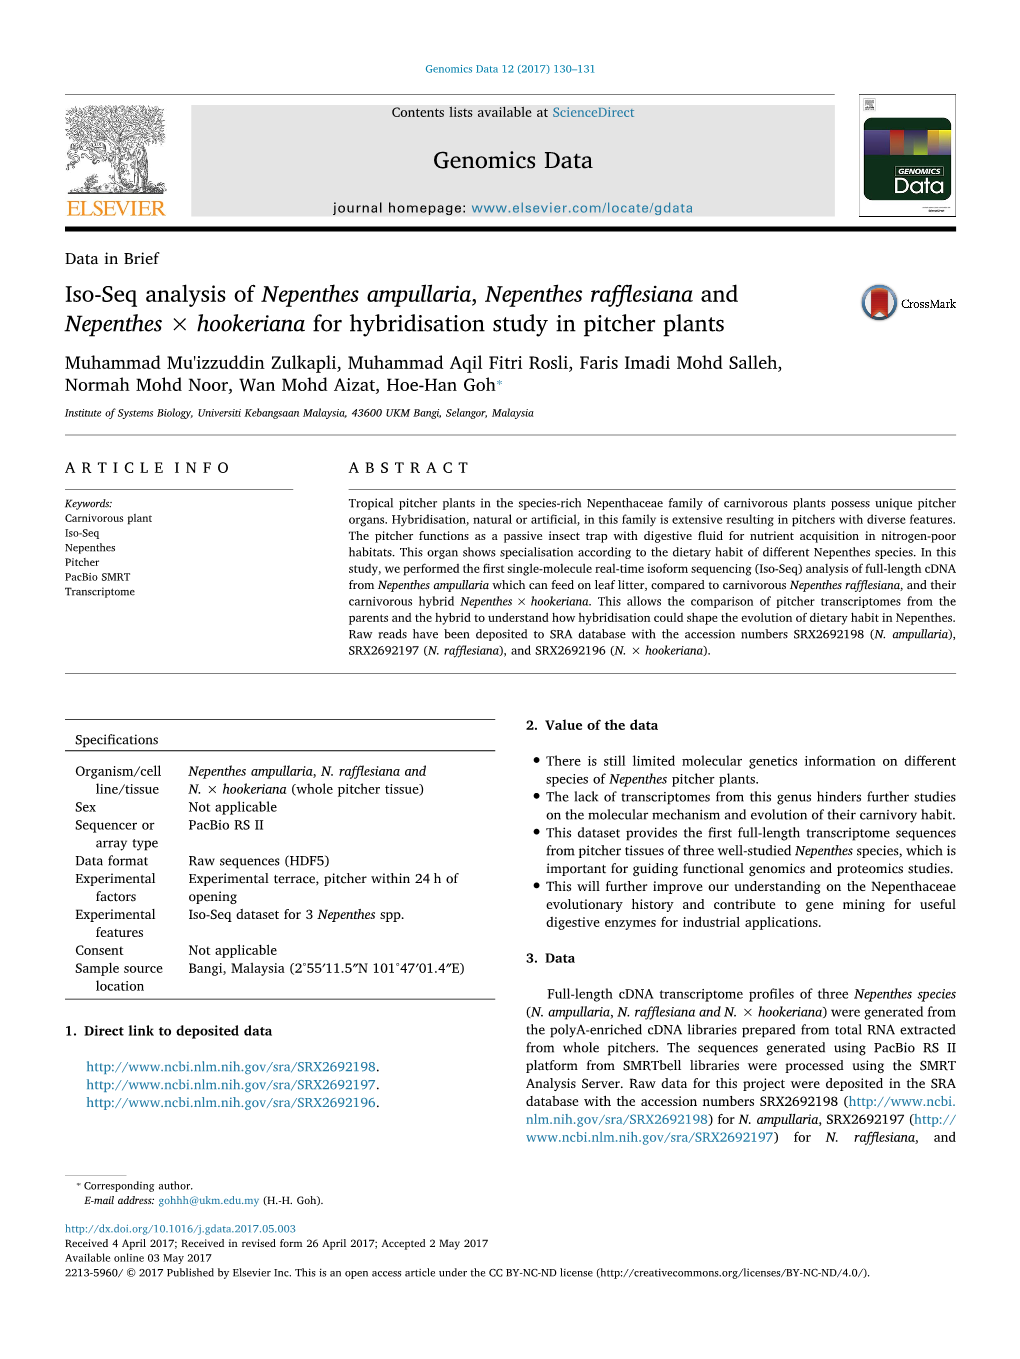 Iso-Seq Analysis of Nepenthes Ampullaria, Nepenthes Rafflesiana